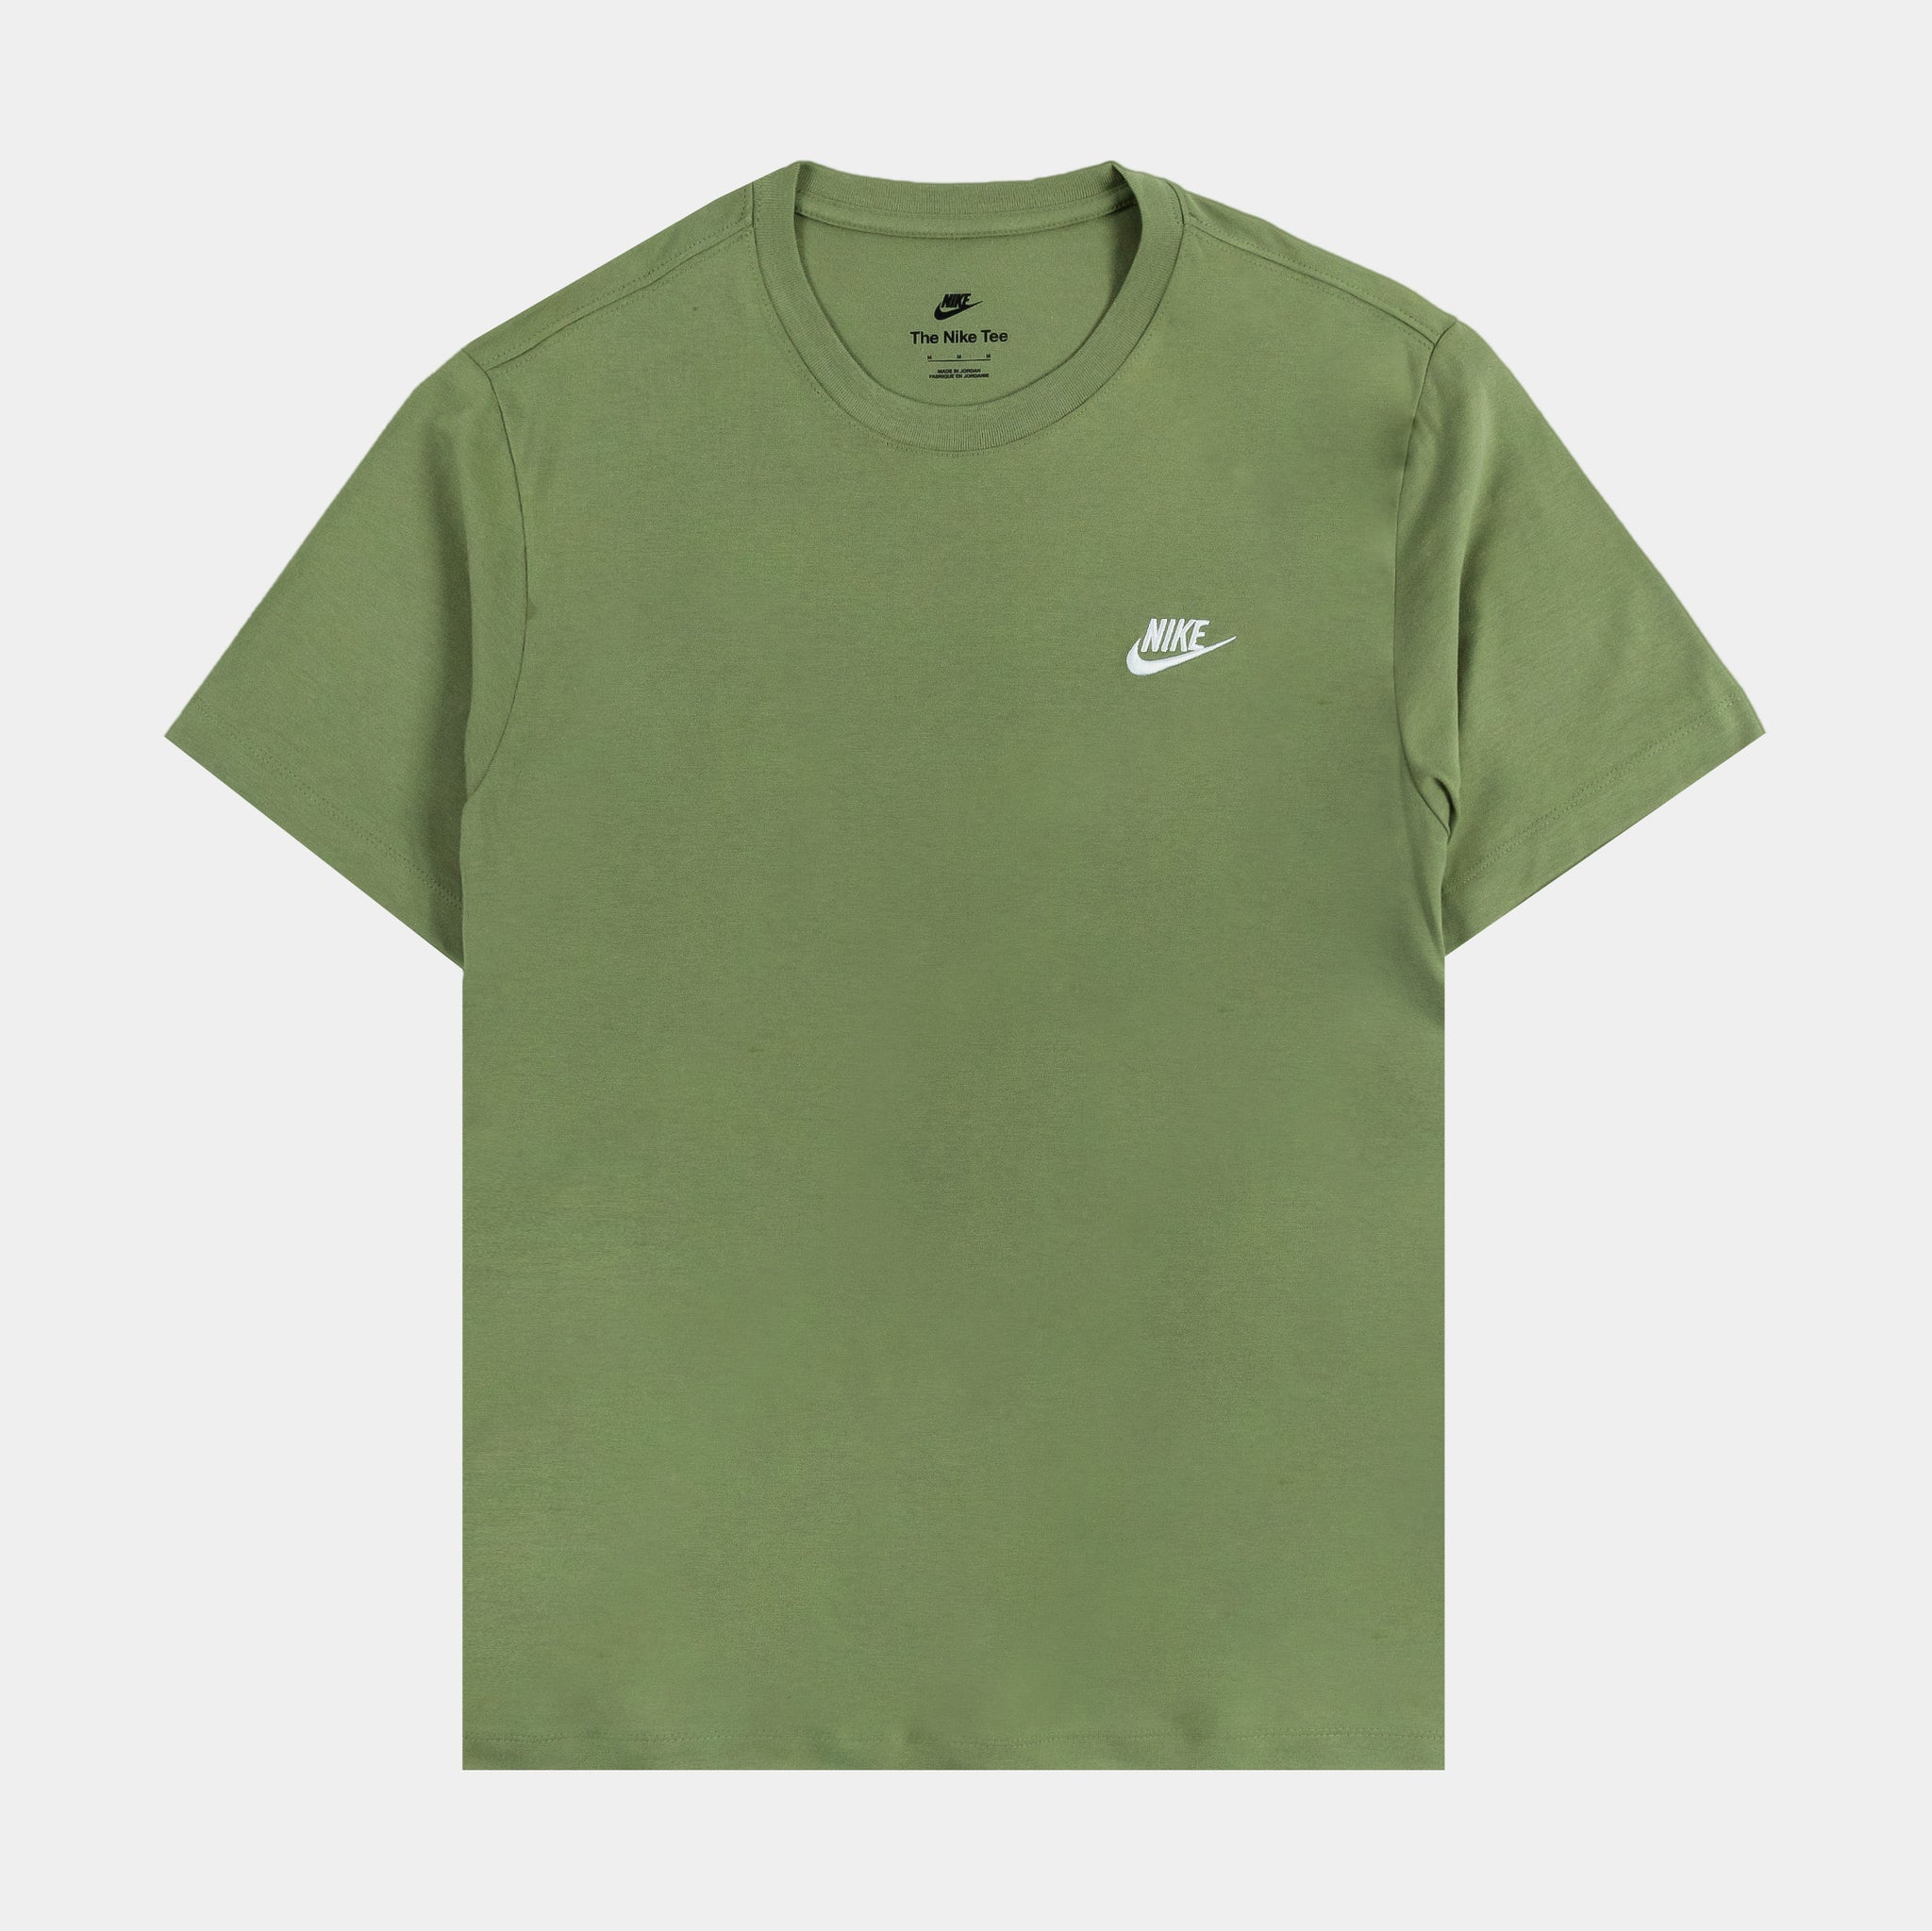 Club Palace Sleeve Green Shirt Nike – Short AR4997-386 Mens Shoe NSW